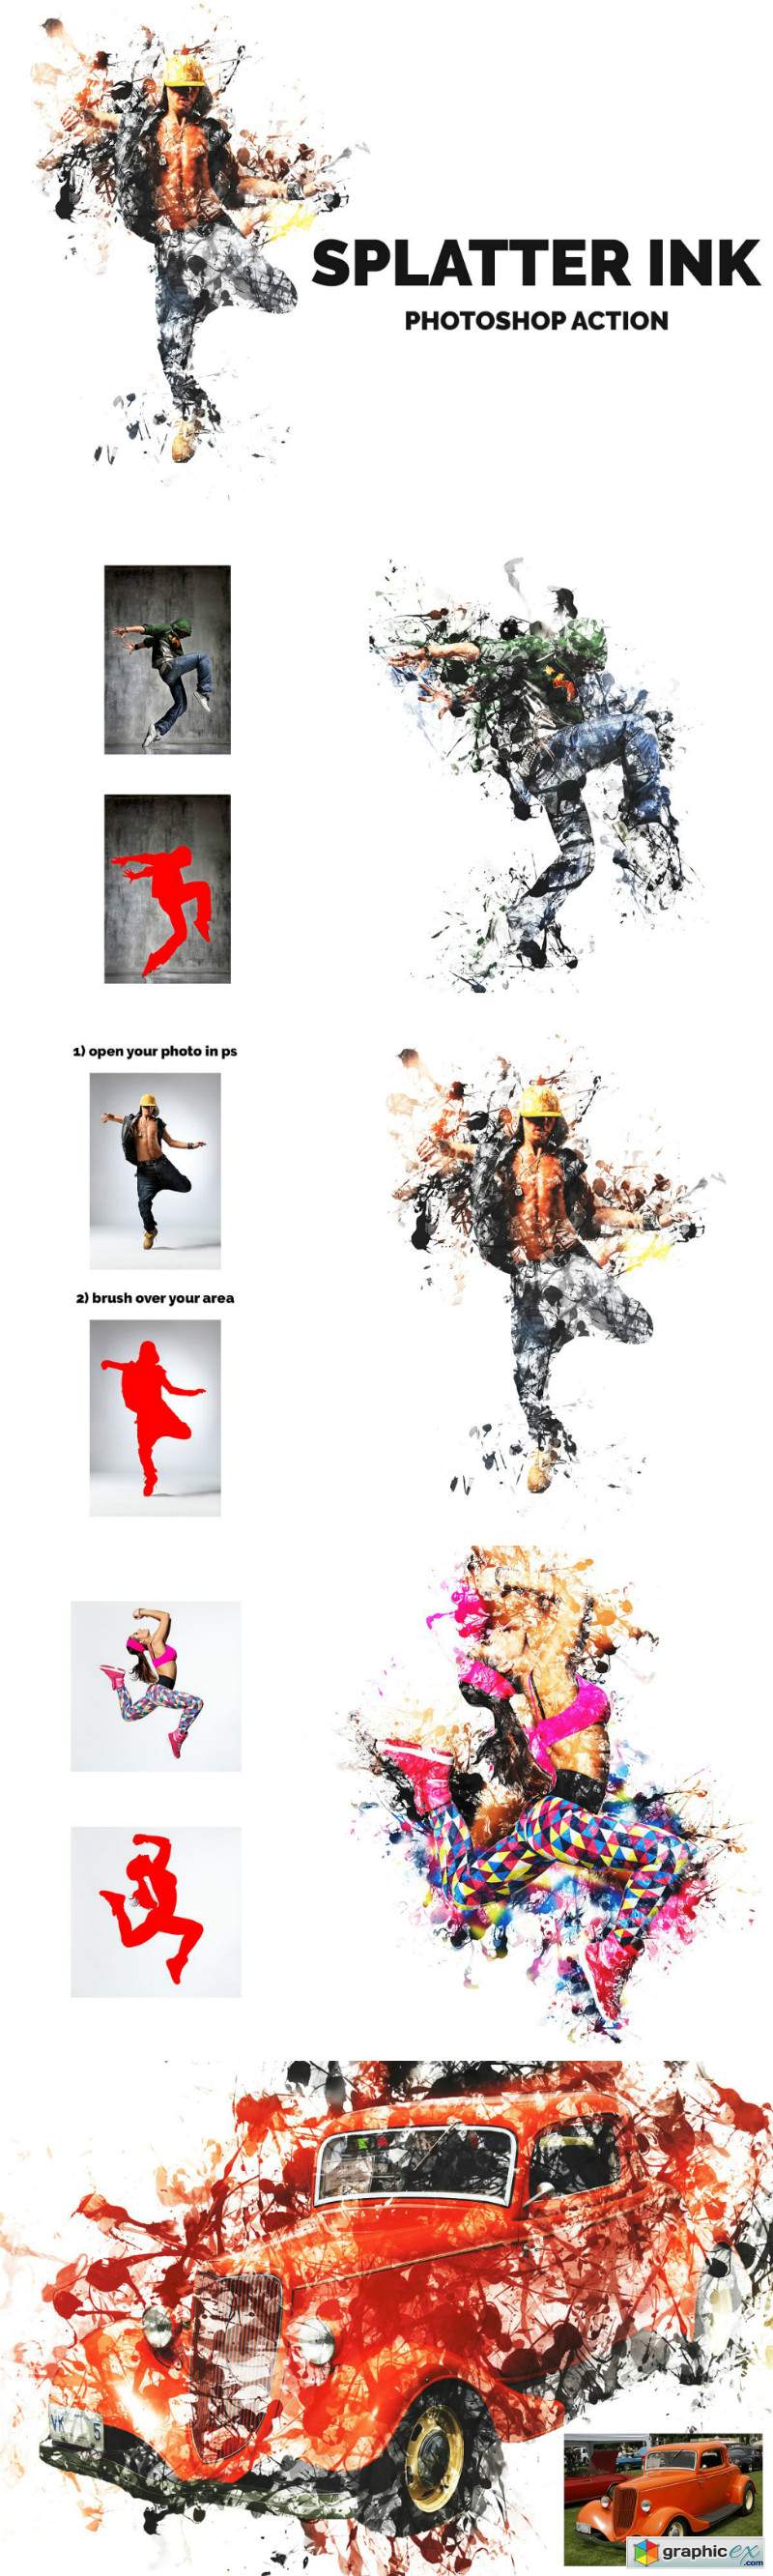 splatter ink photoshop action 3593546  u00bb free download vector stock image photoshop icon